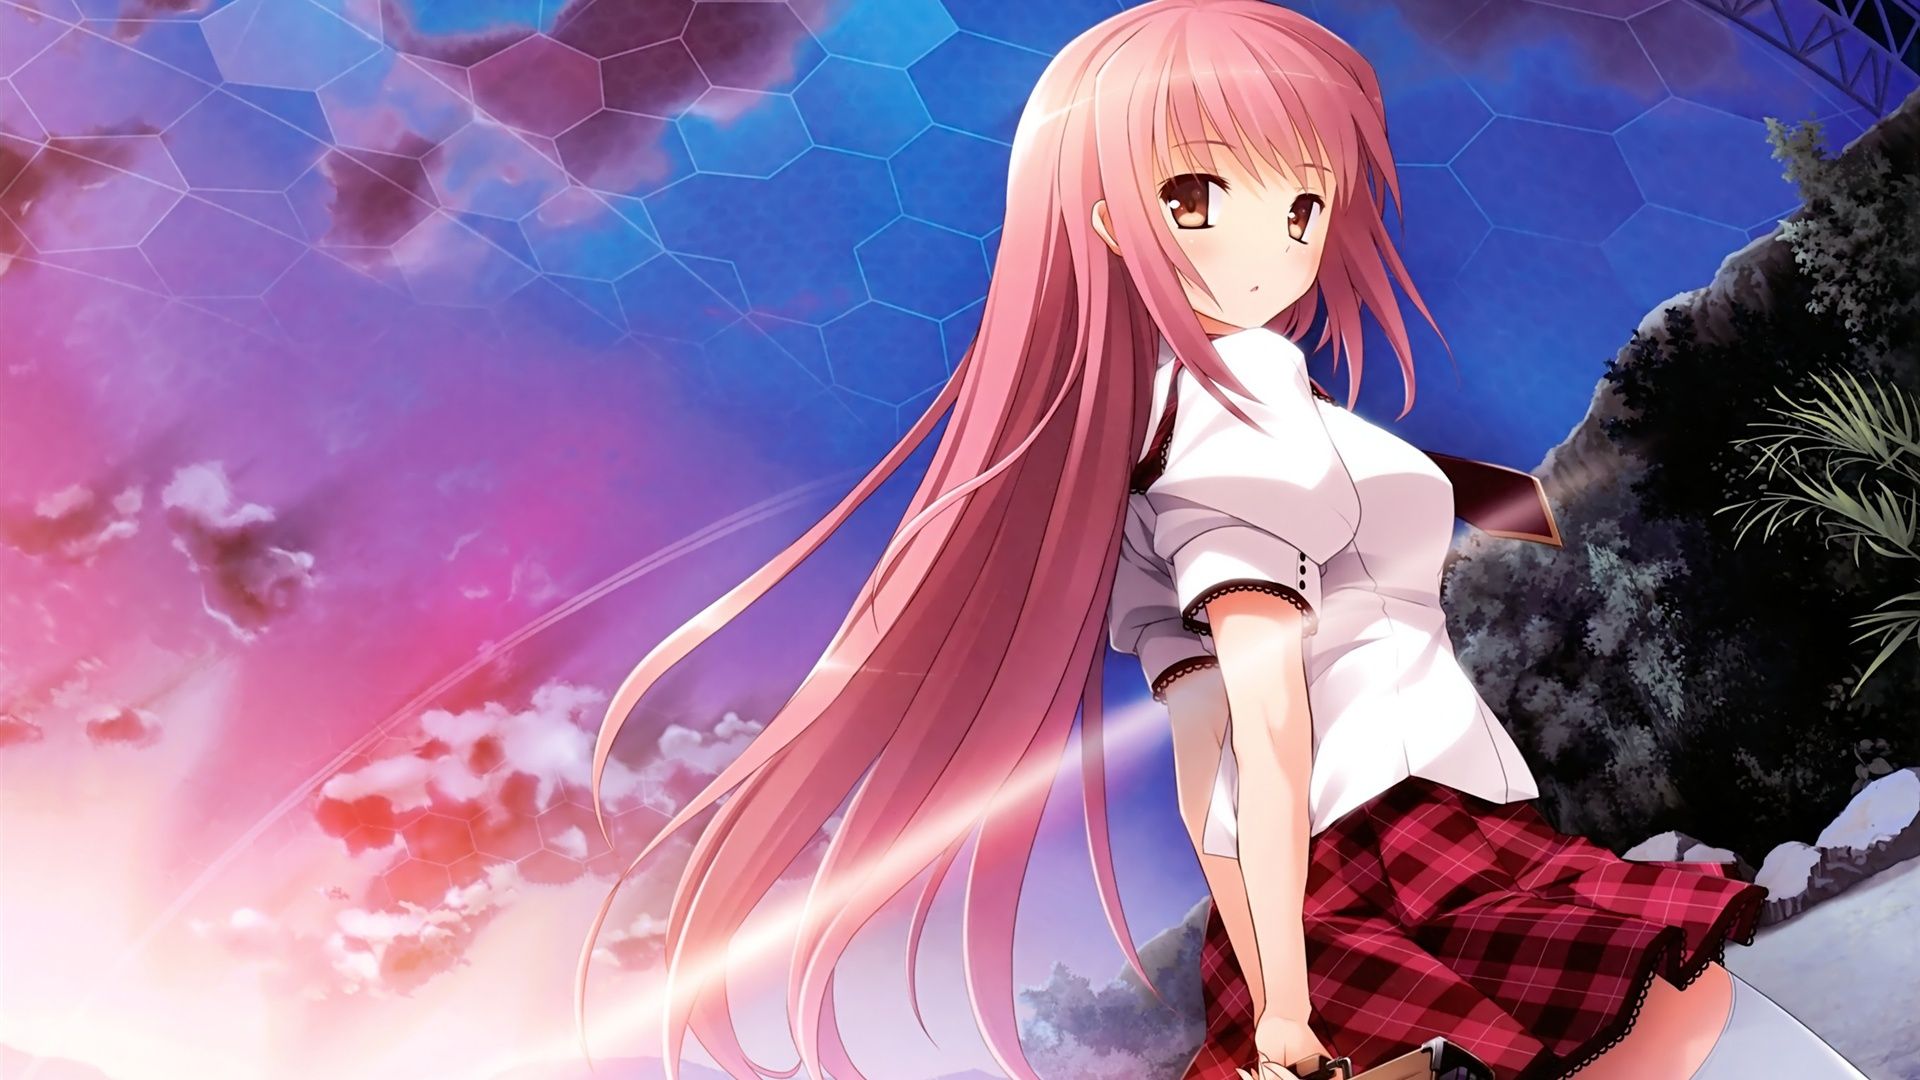 Wallpaper Imouto no Katachi, pink hair anime girl 2560x1600 HD Picture, Image